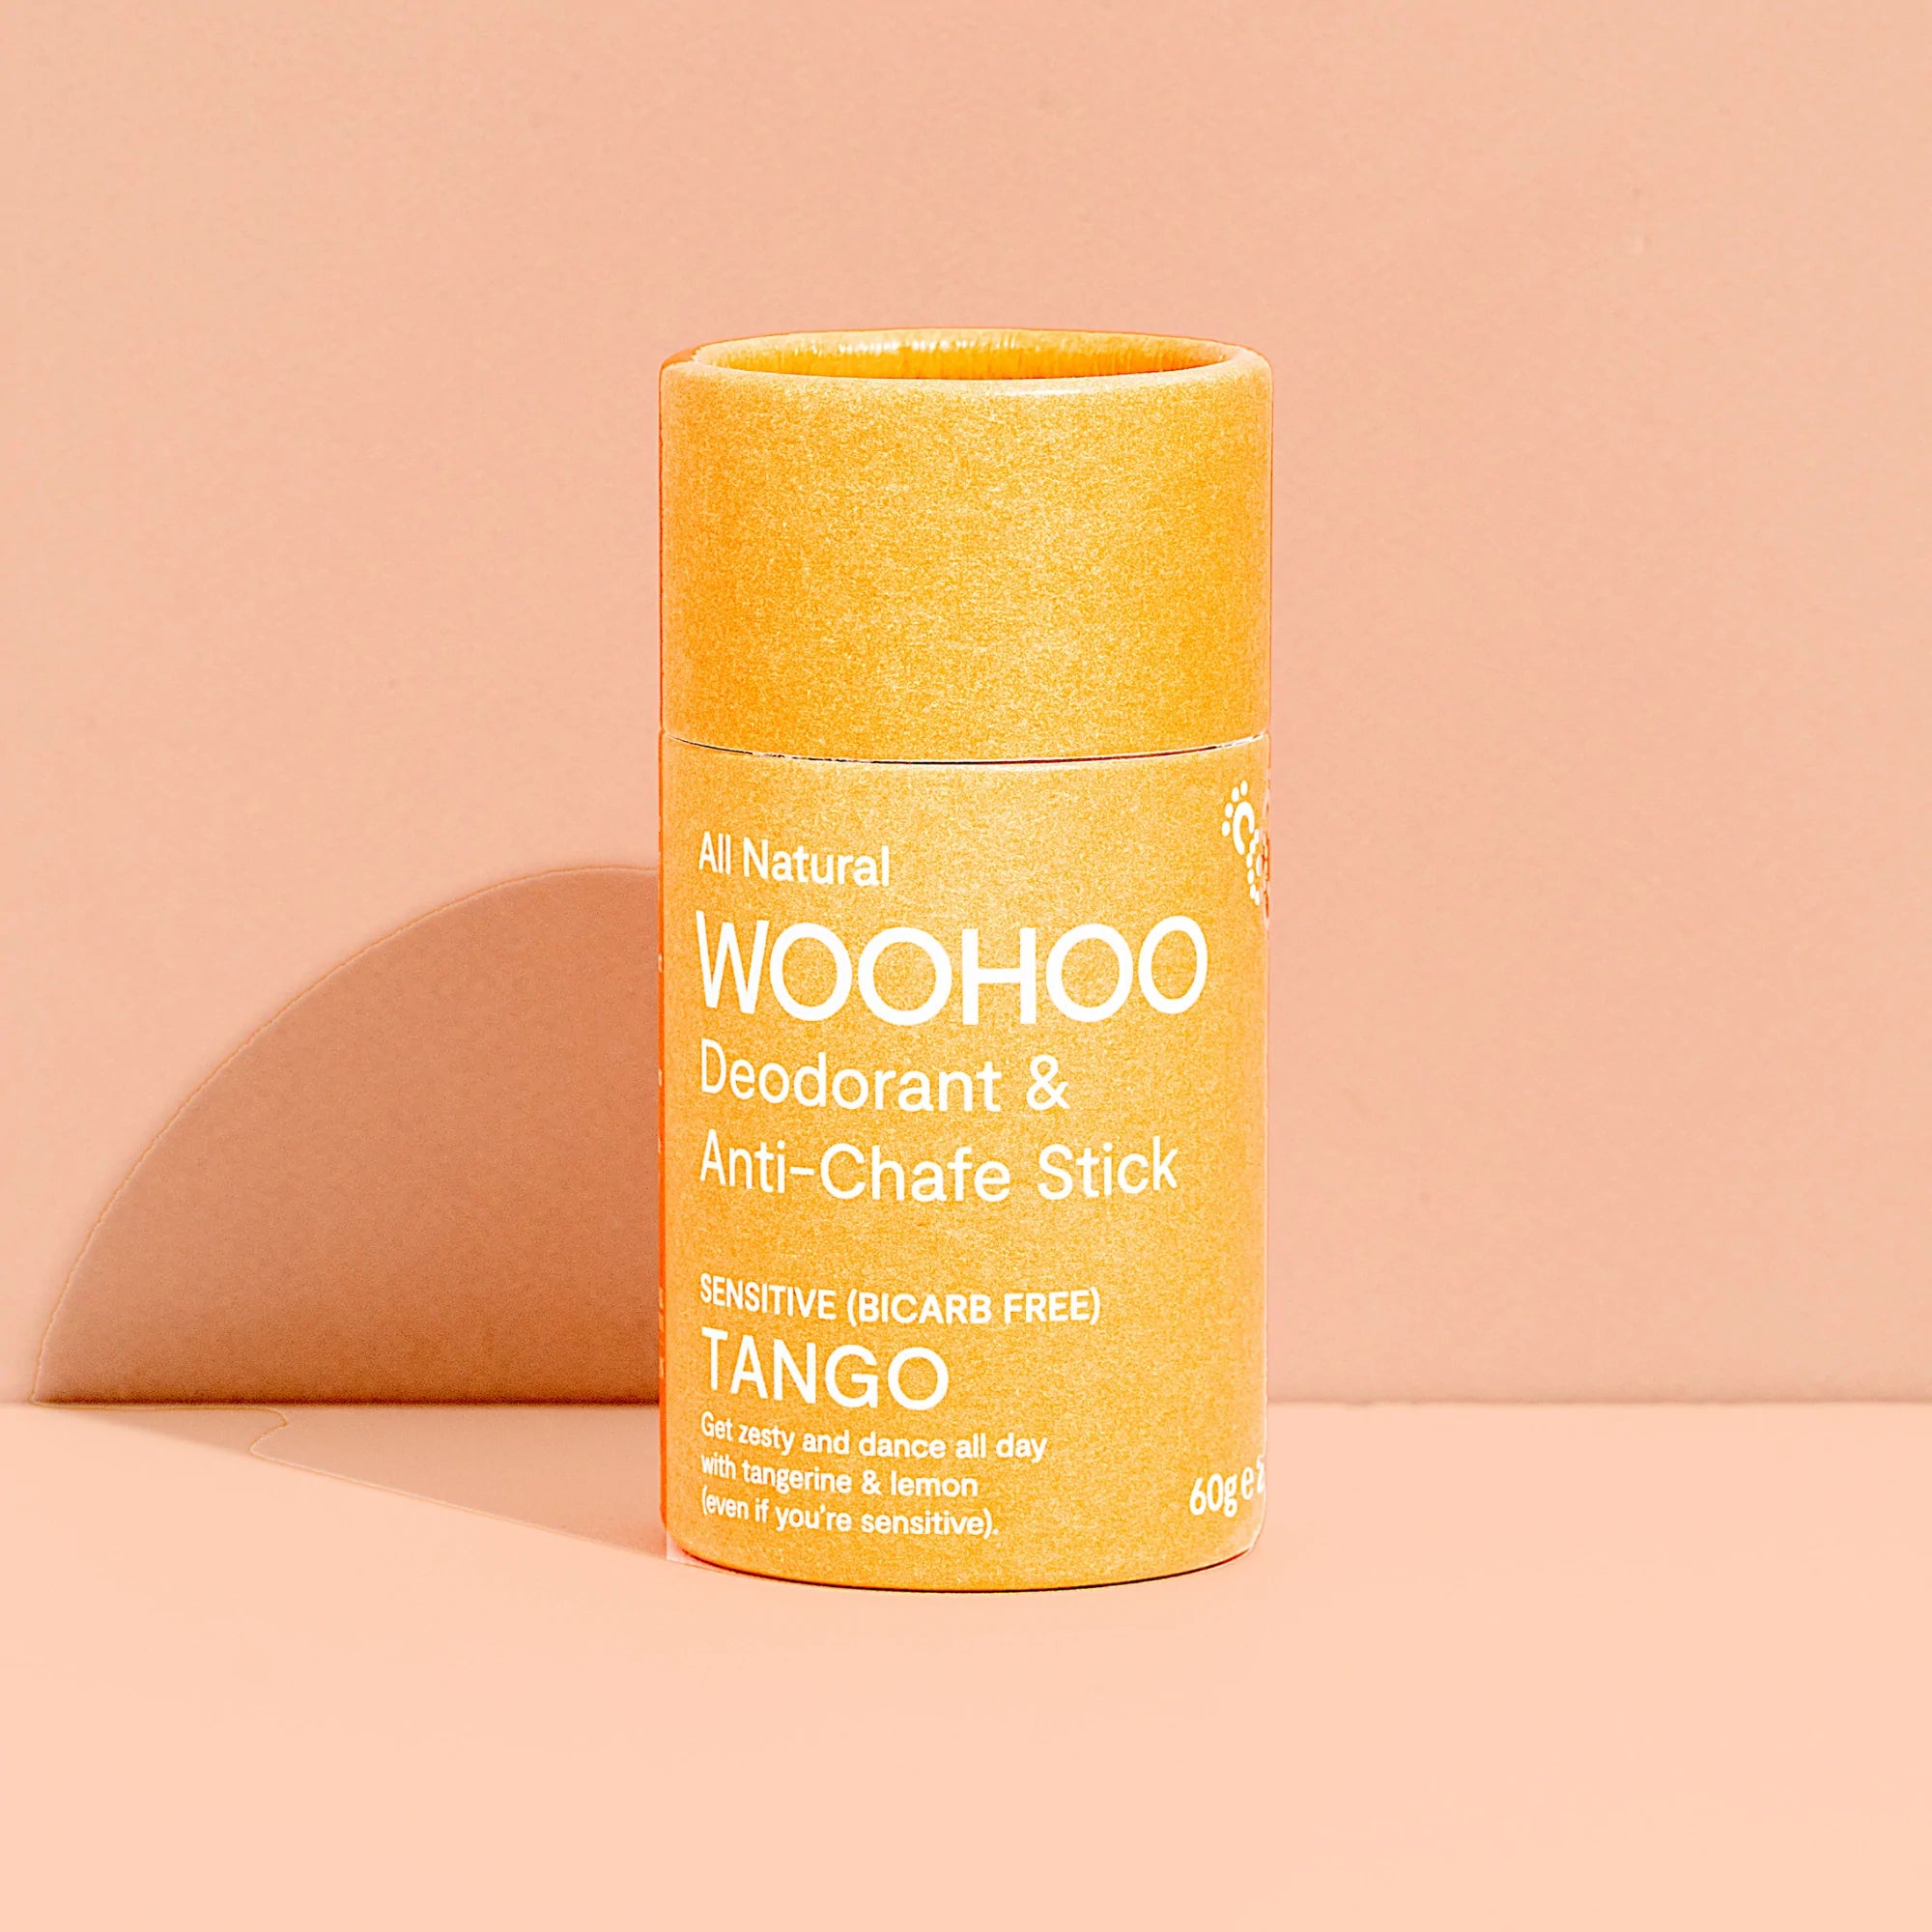 Woohoo Natural Deodorant & Anti-Chafe Stick (Tango) 60g-The Living Co.